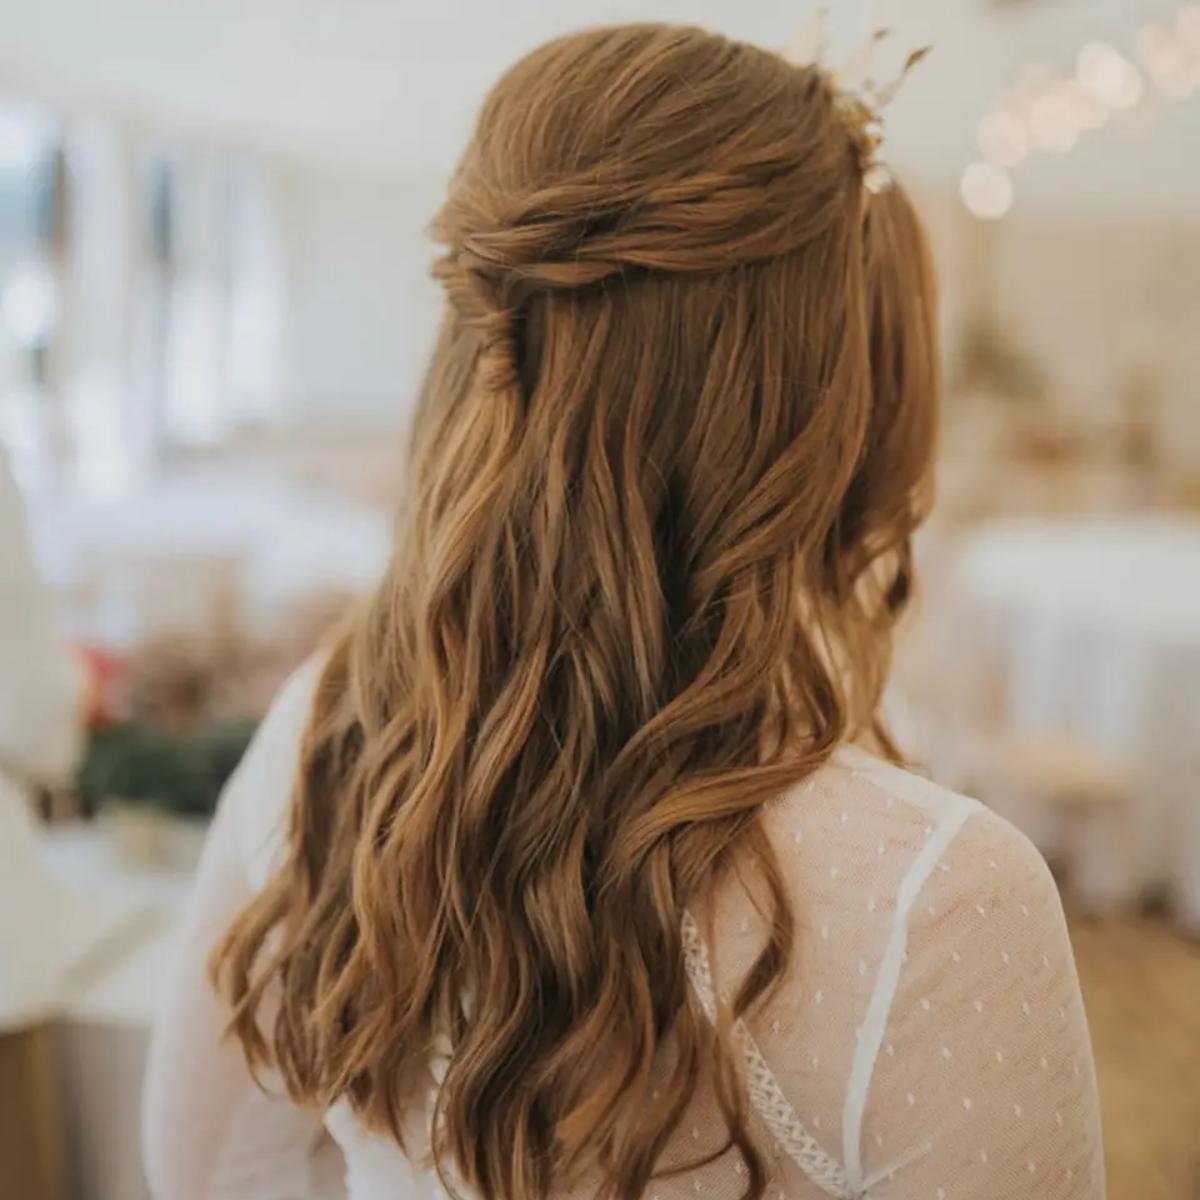 half up hair style wedding guest - Lemon8 Search